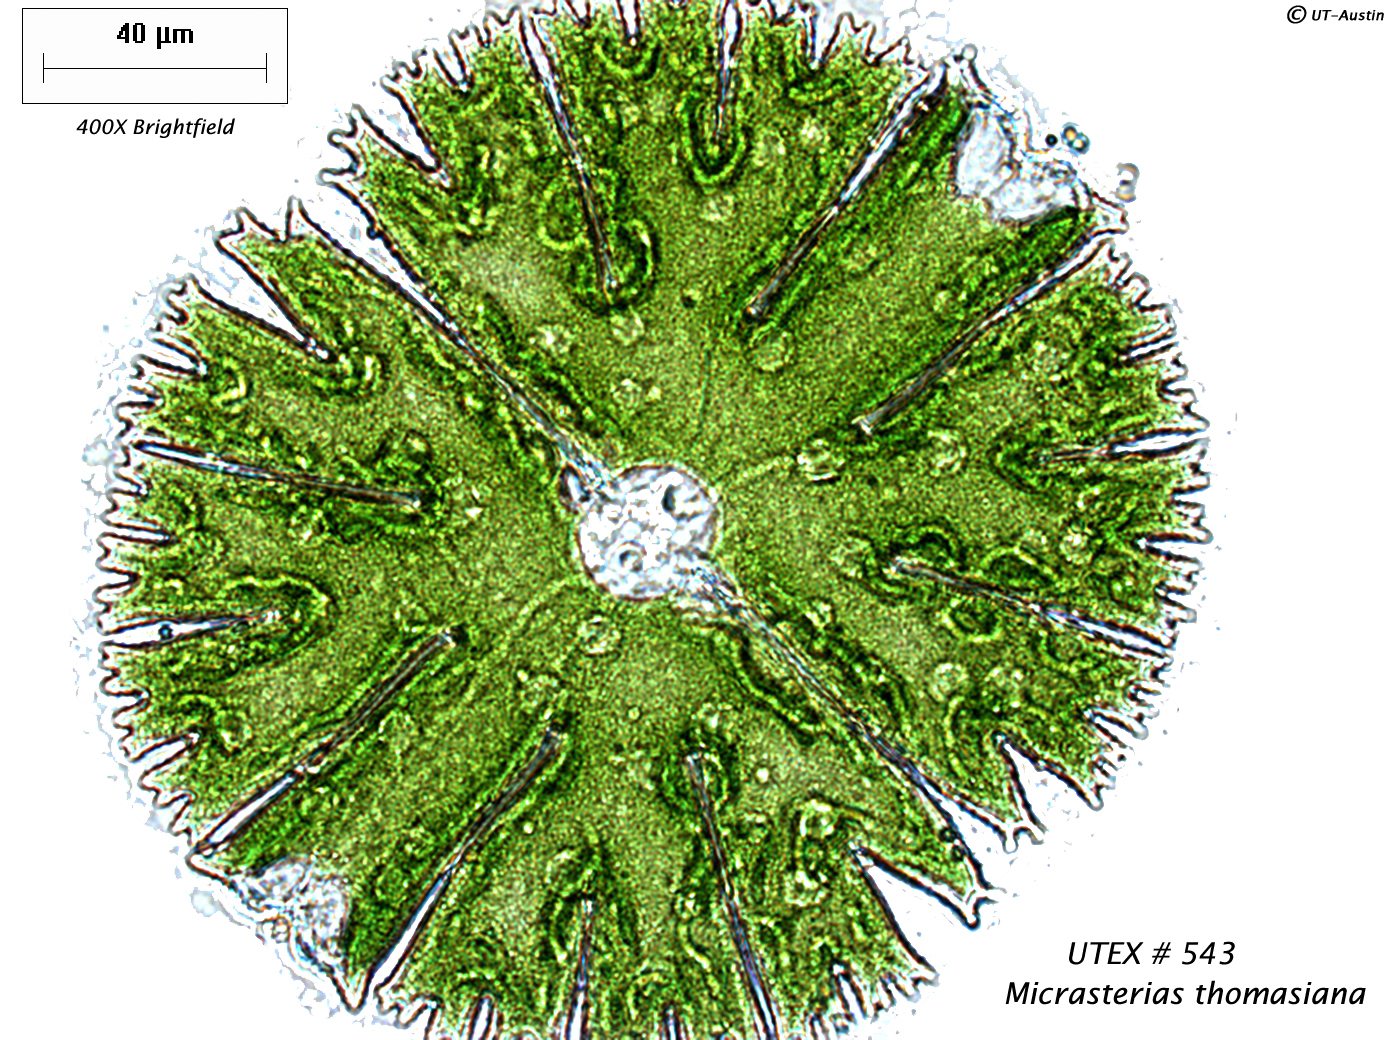 Micrasterias thomasiana. Image credit: UTEX Culture Collection of Algae/Ann Clemens